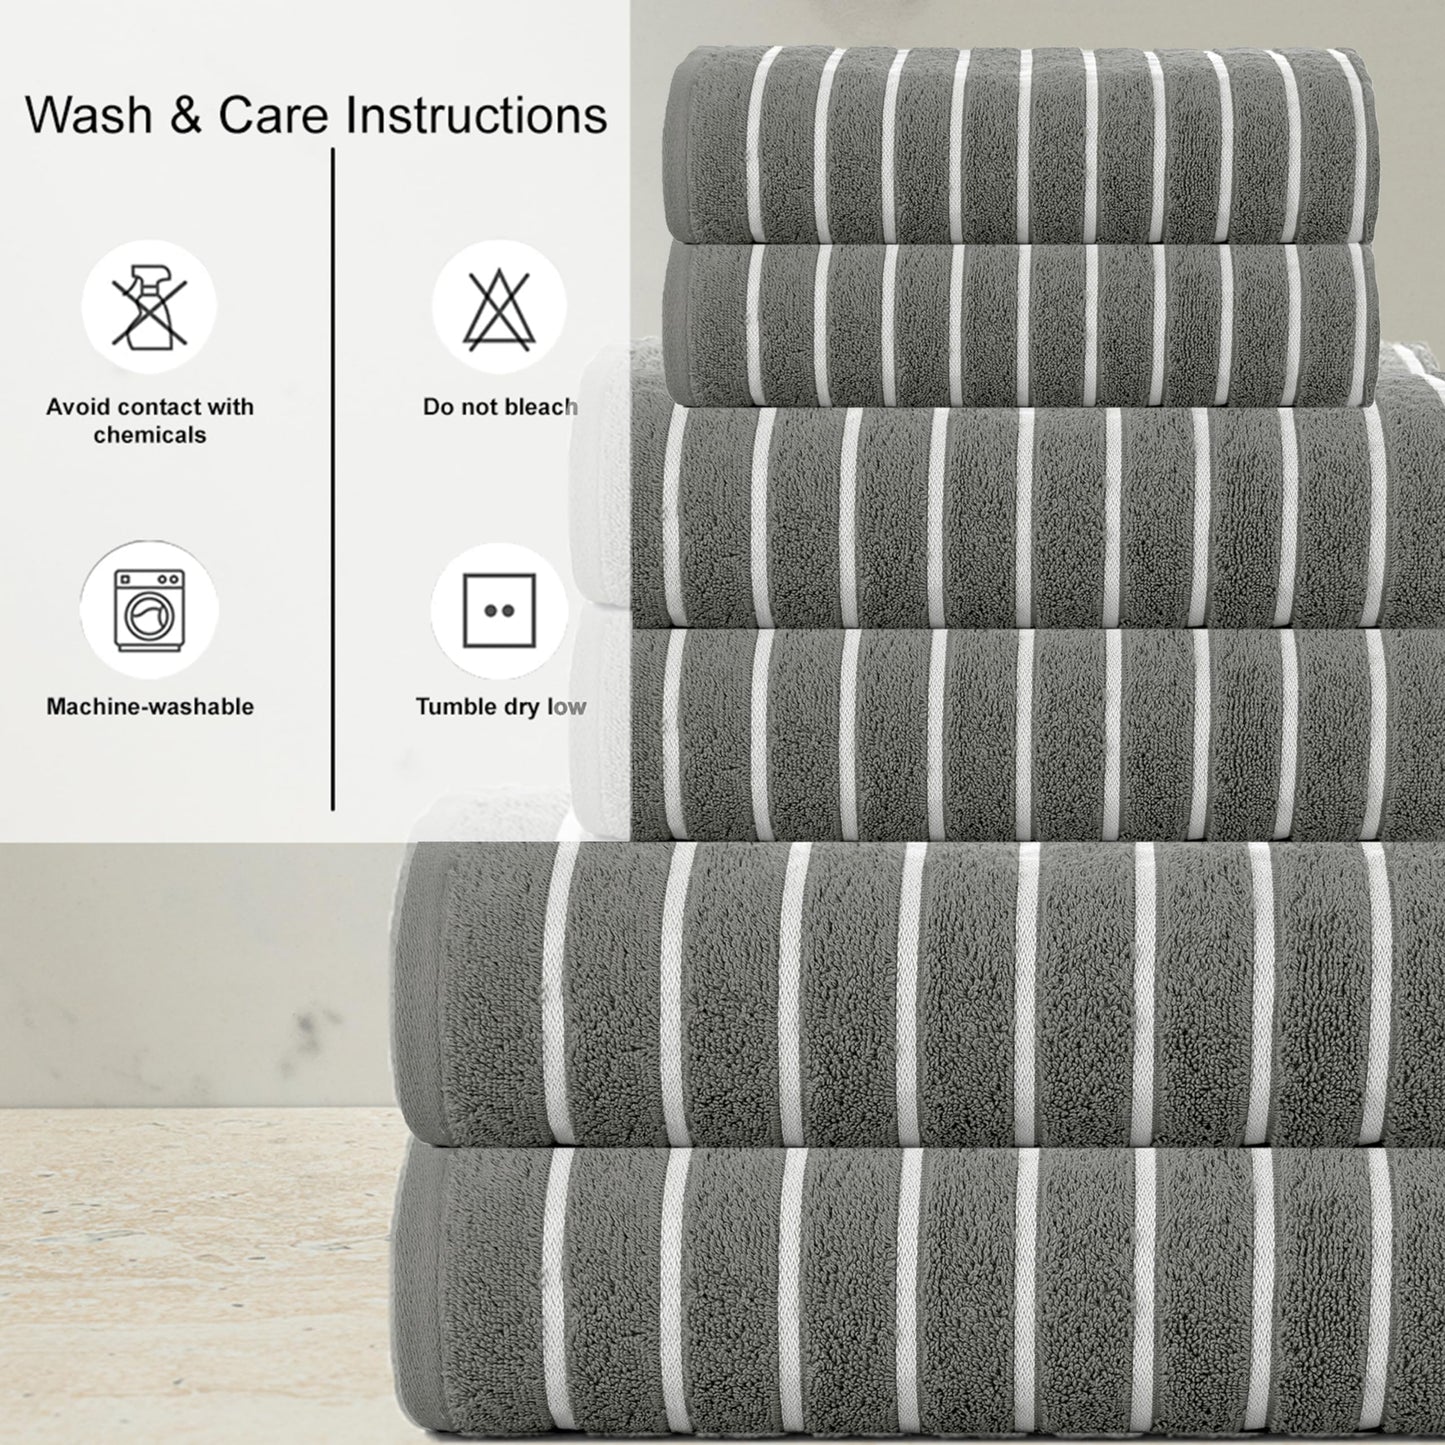 CASA COPENHAGEN Ecstatic 6 Pieces Towel Set- Pine Grey, 600 GSM 2 Bath Towel 2 Hand Towel 2 Washcloth, Designed in Denmark Made of Soft Egyptian Cotton for Bathroom, Kitchen & Shower